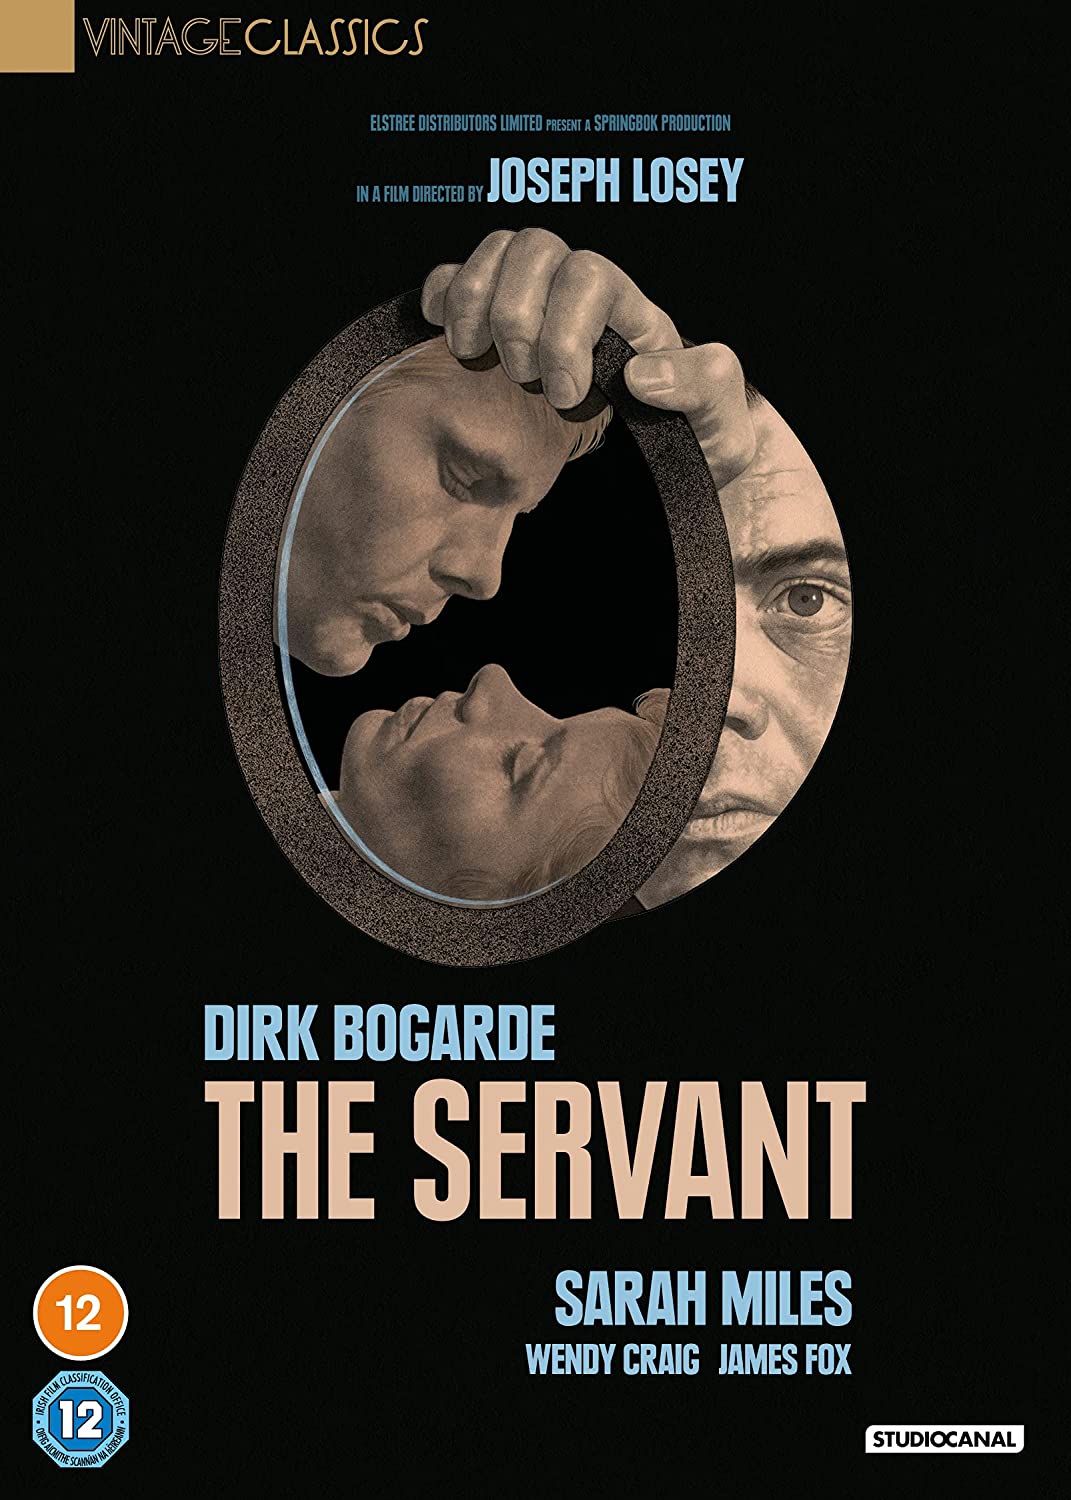 The Servant (Vintage Classics) [DVD]